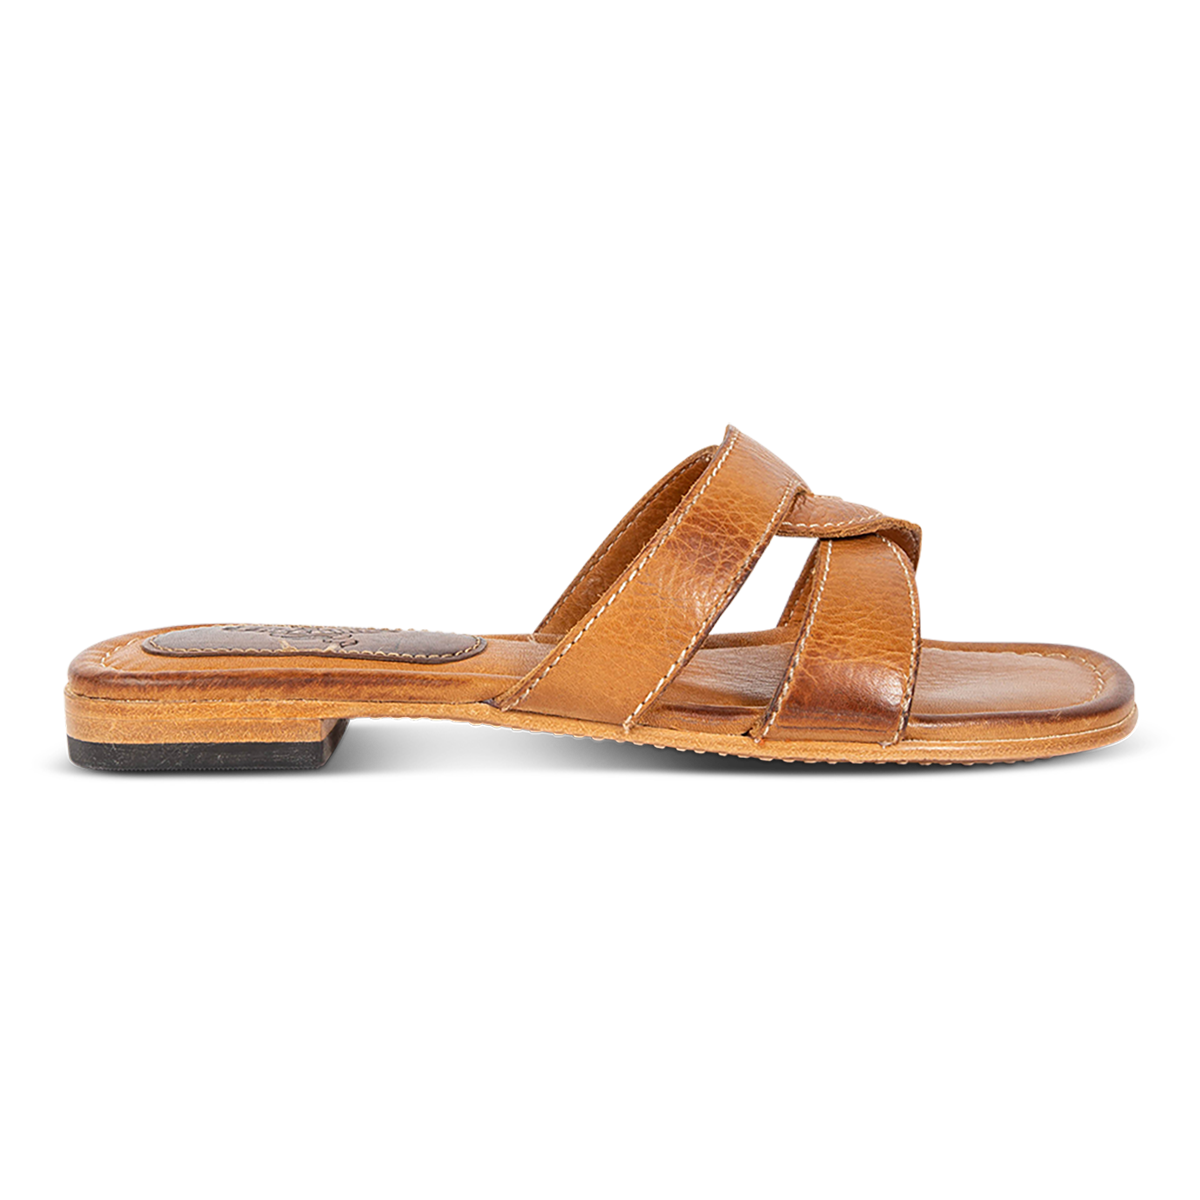 FREEBIRD women's Sawyer wheat low heeled slip on sandal featuring criss-cross leather foot straps